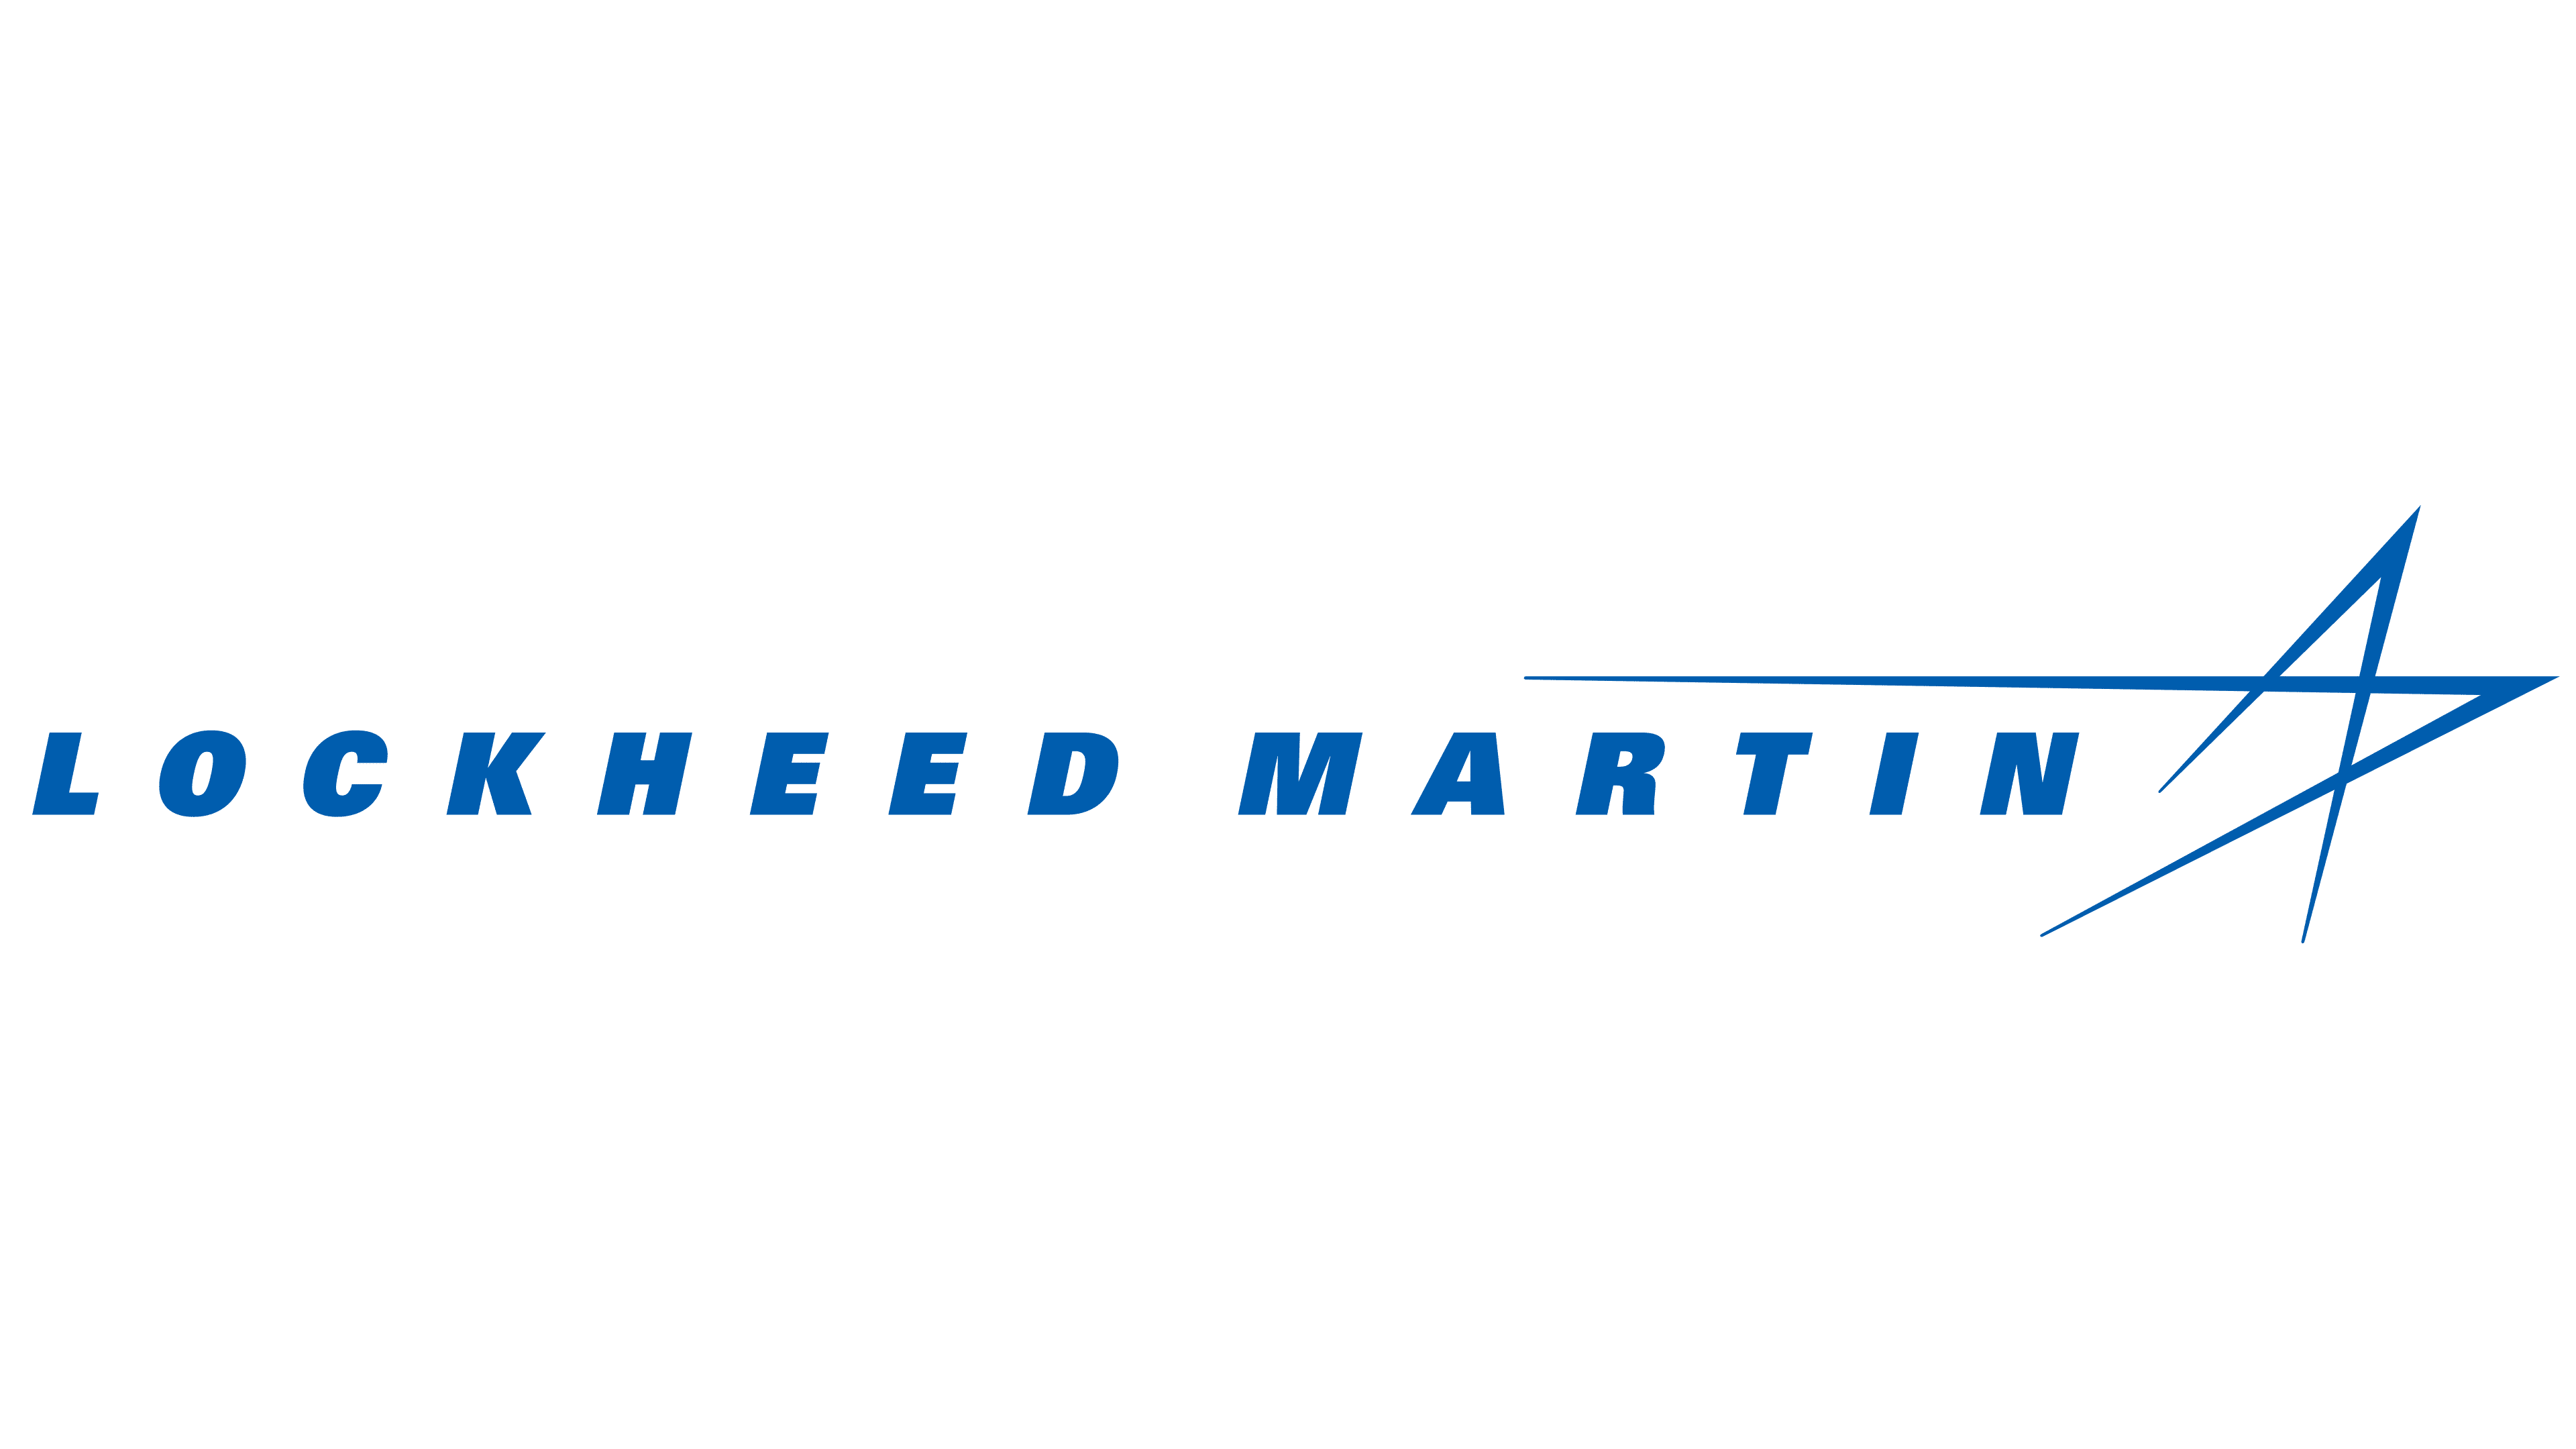 Lockheed Martin Logo histoire, signification de l'emblème